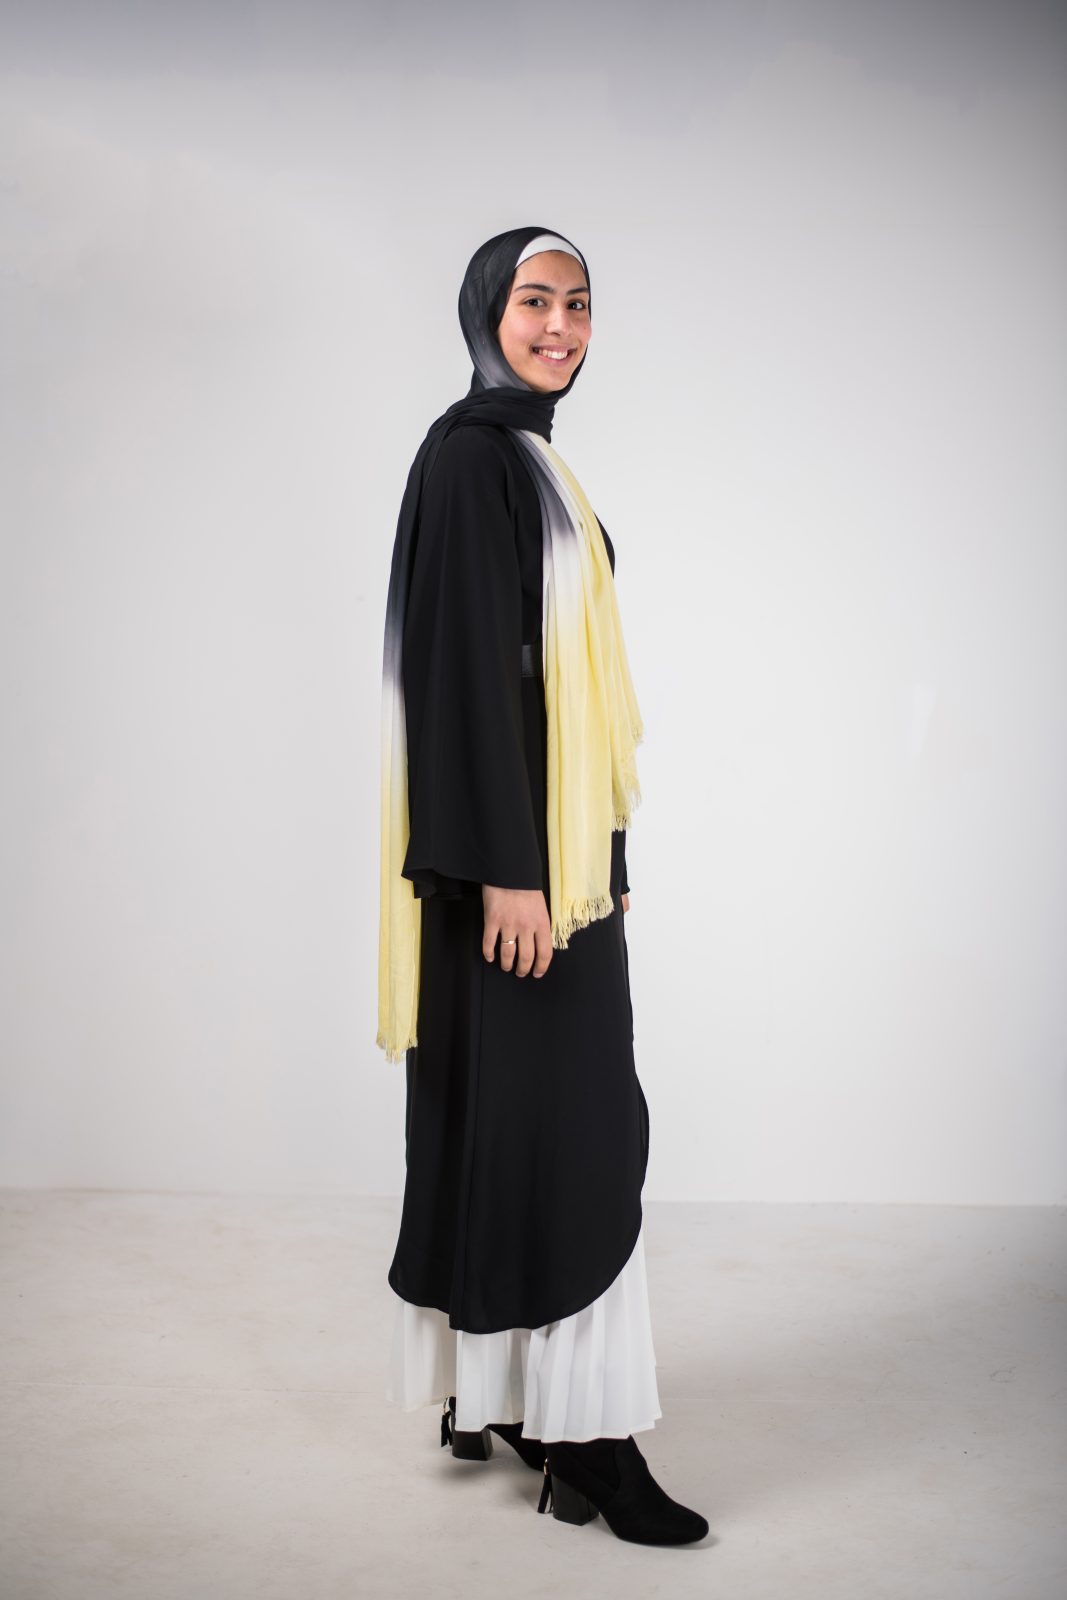 hijabi model in EMMA Scarf Electric Black smiling at camera